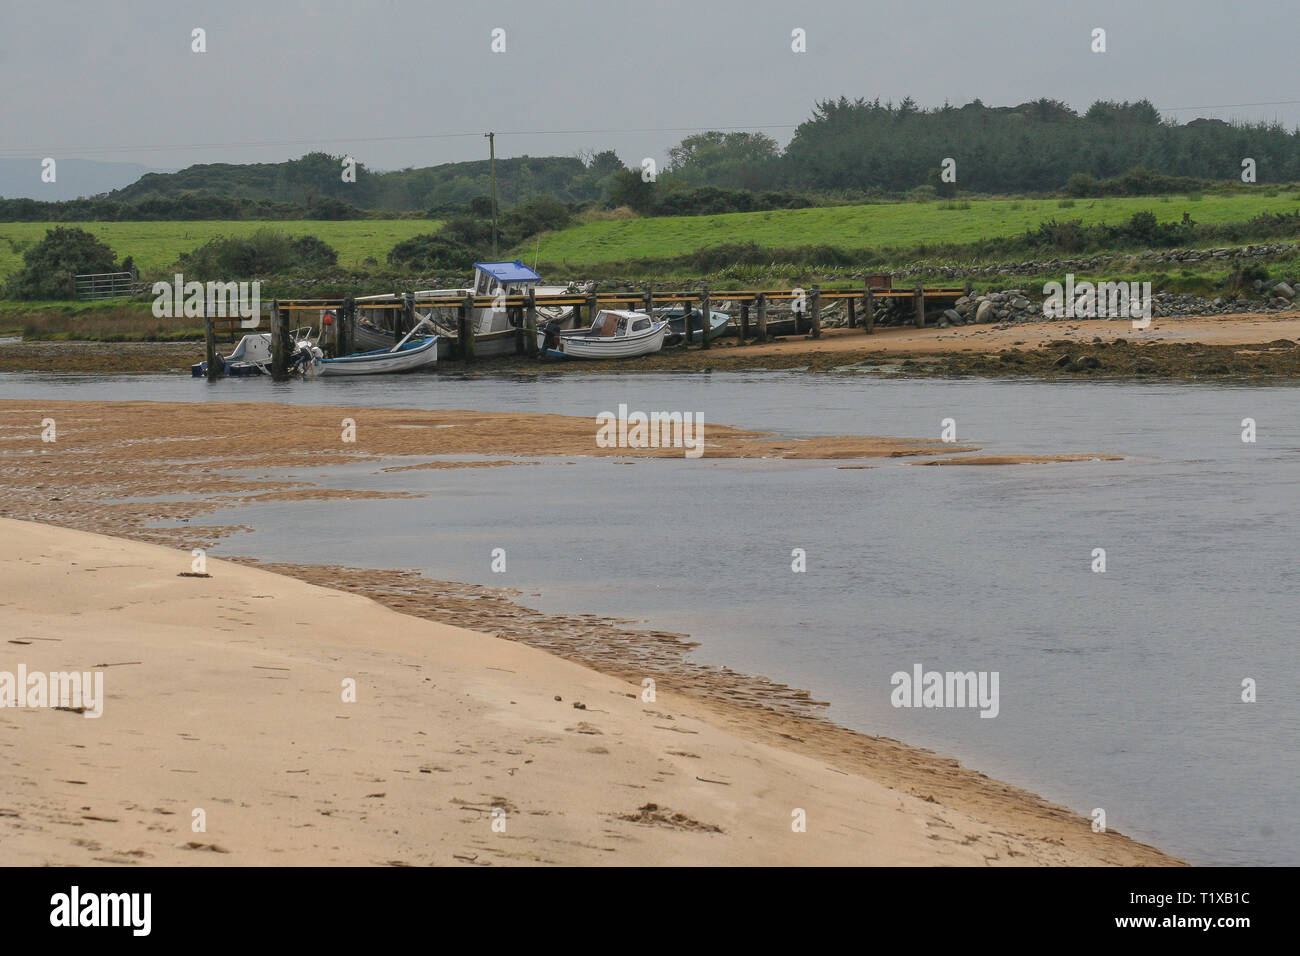 Inishowen Donegal, kleine Boote am Steg bei Ebbe auf dem culdaff Fluss, fließt in den Atlantik Culdaff Strand in County Donegal. Stockfoto